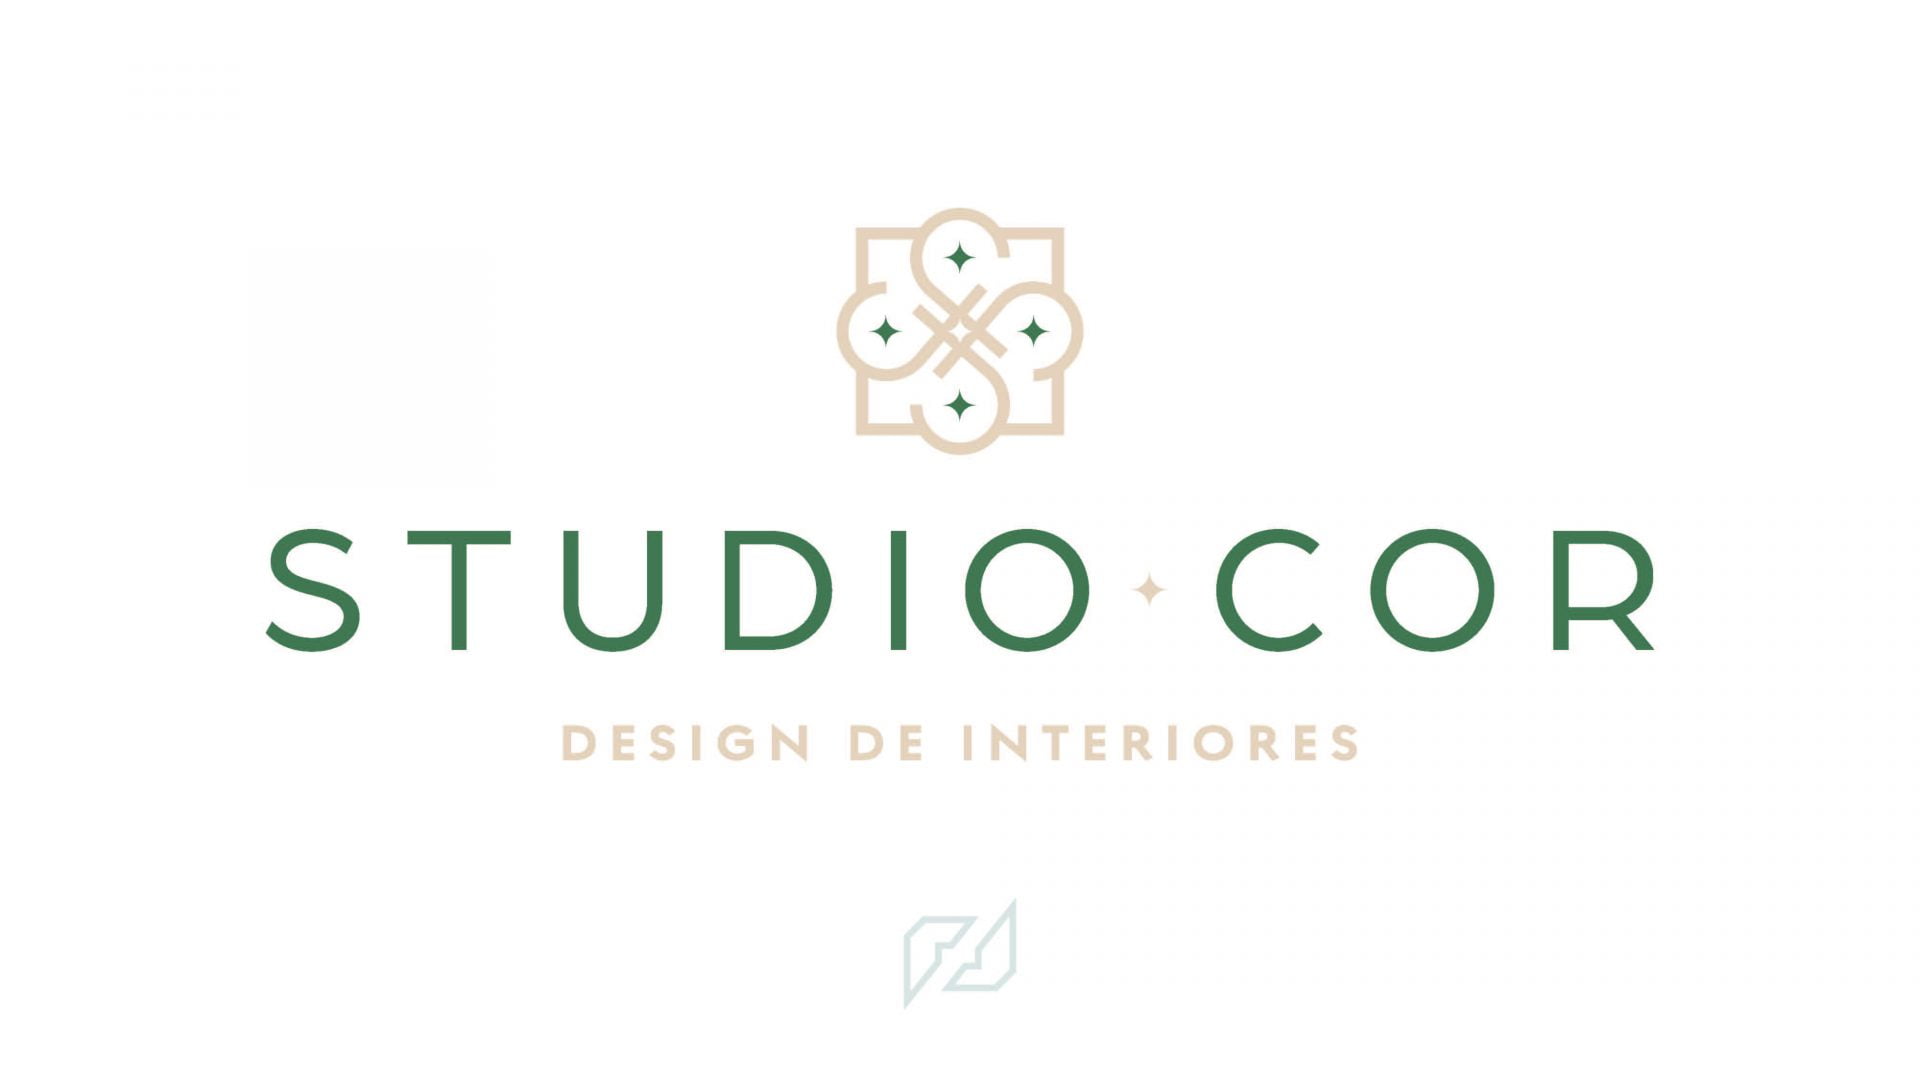 Studio Cor Identidade Visual